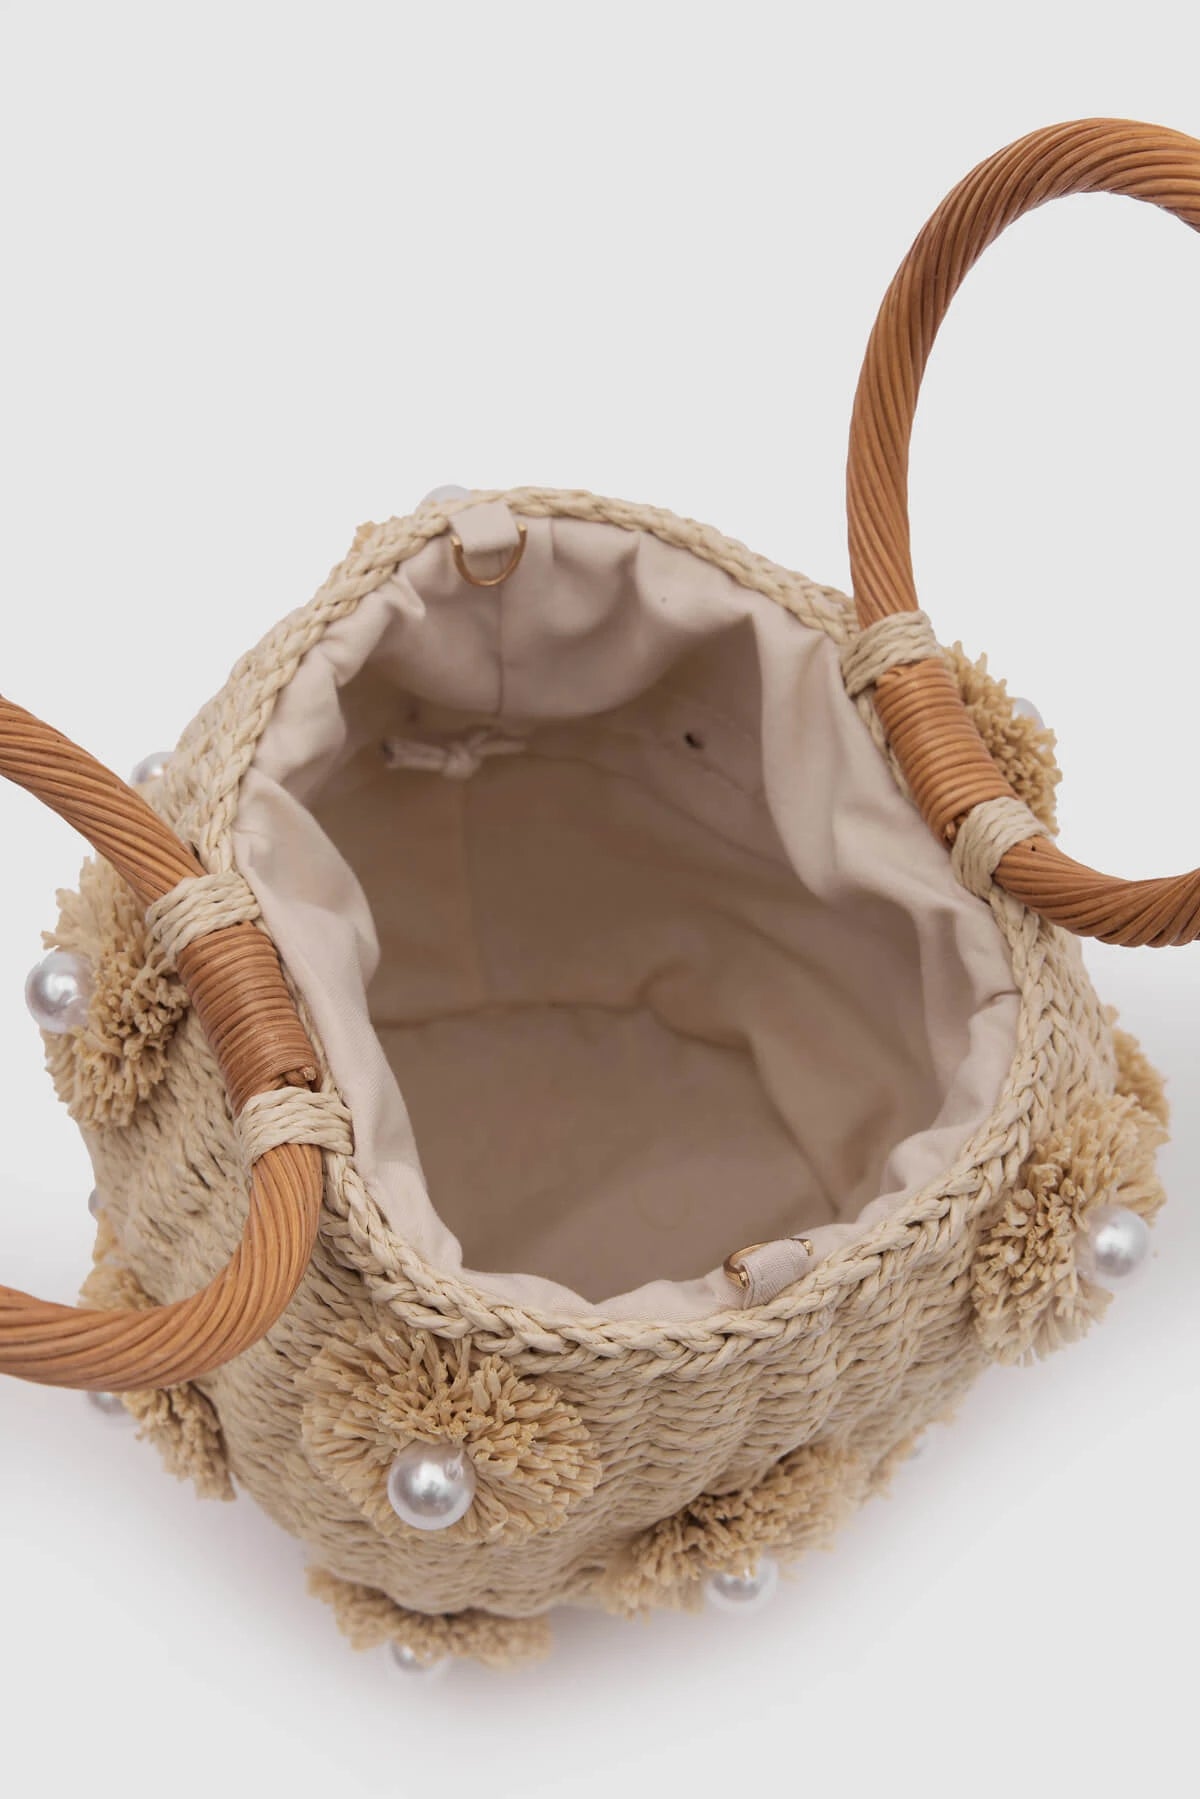 Wooden Handle Basket Straw Bag straw bags LUNARITY GARAGE   